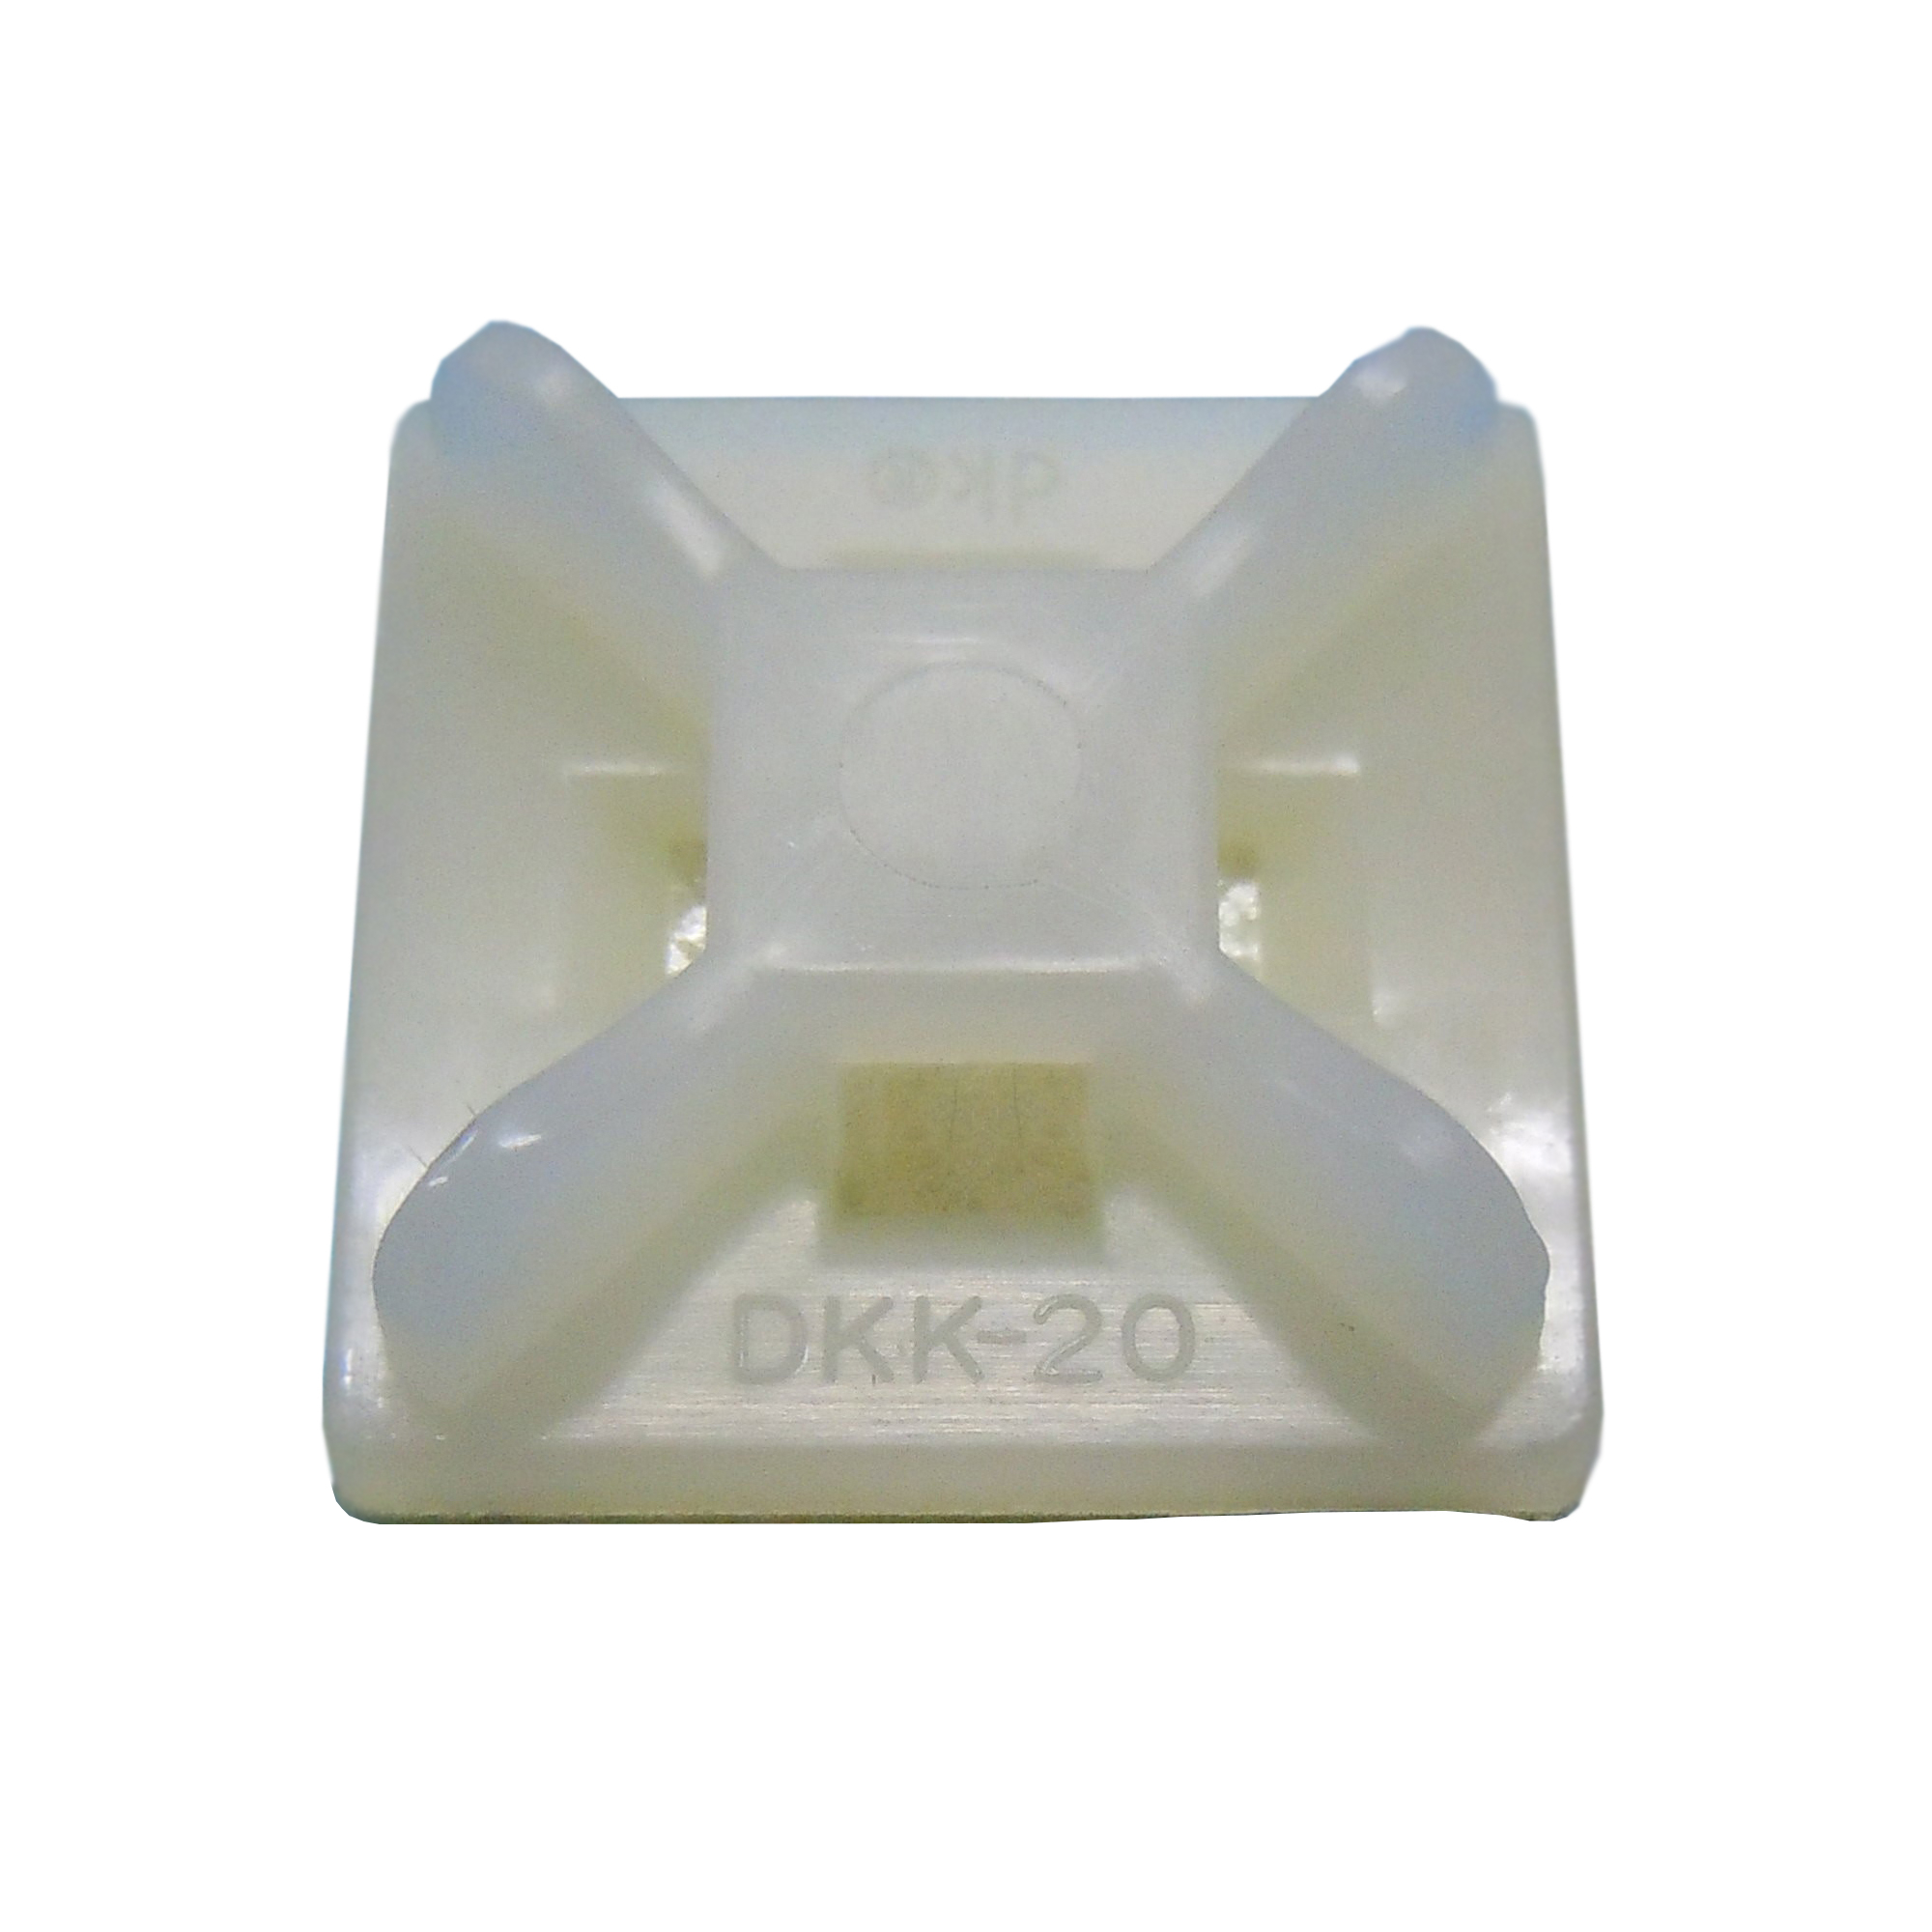 Adhesive Fixture (Strong Adhesive) (DKK-30-10P) 